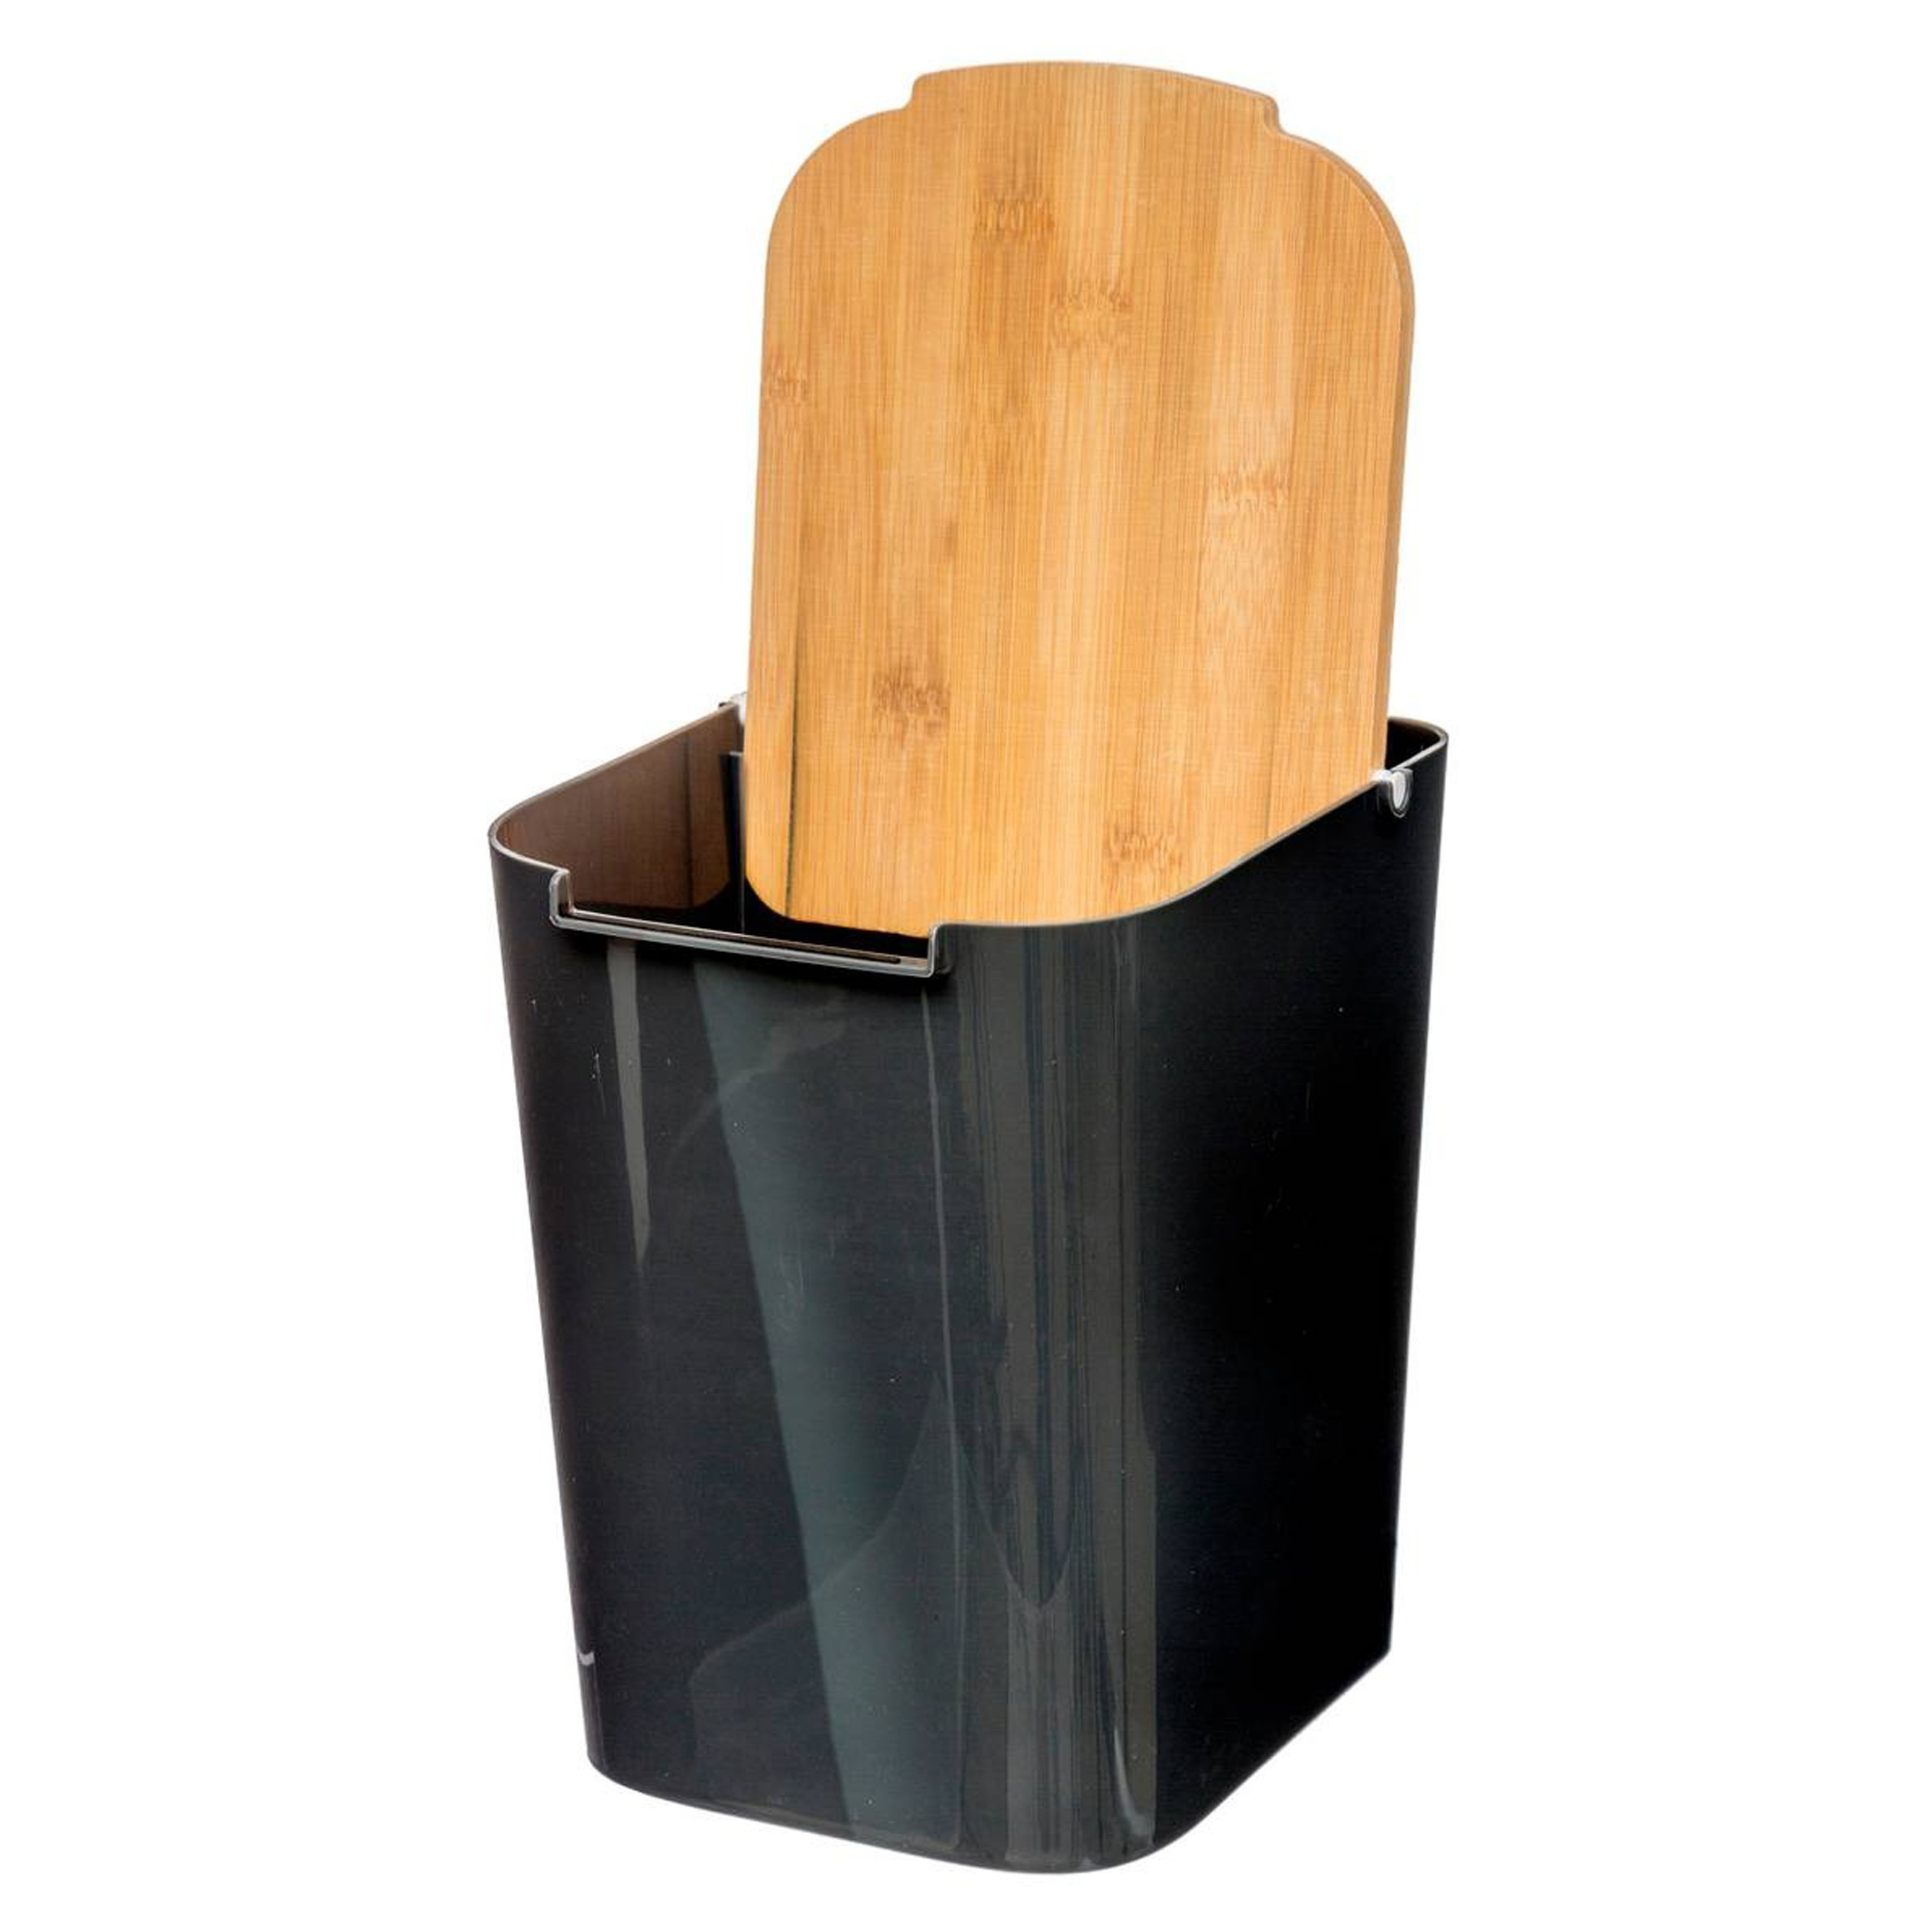 Prullenbak-vuilnisbak 5 liter bamboe zwart-lichtbruin 24 x 19 cm badkamer afvalbak